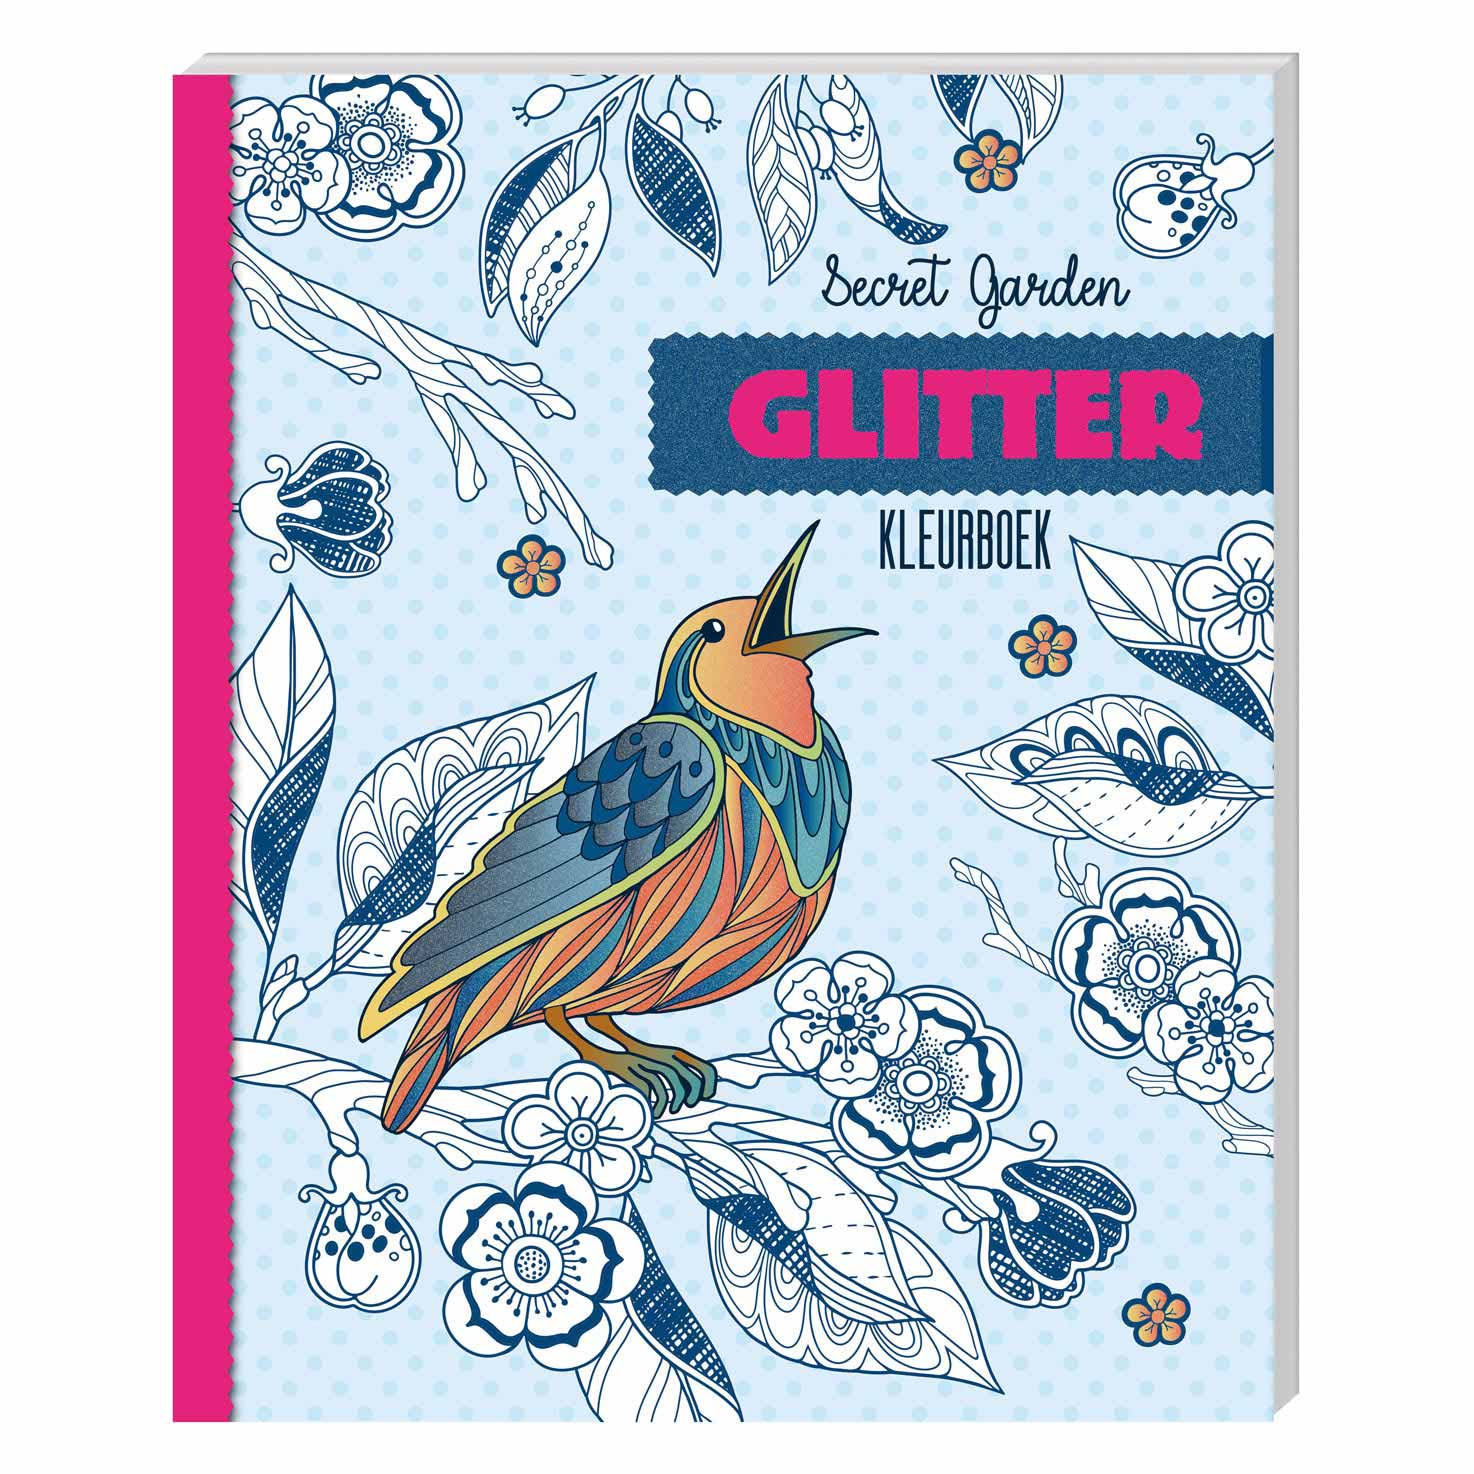 Glitter Kleurboek - Secret Garden